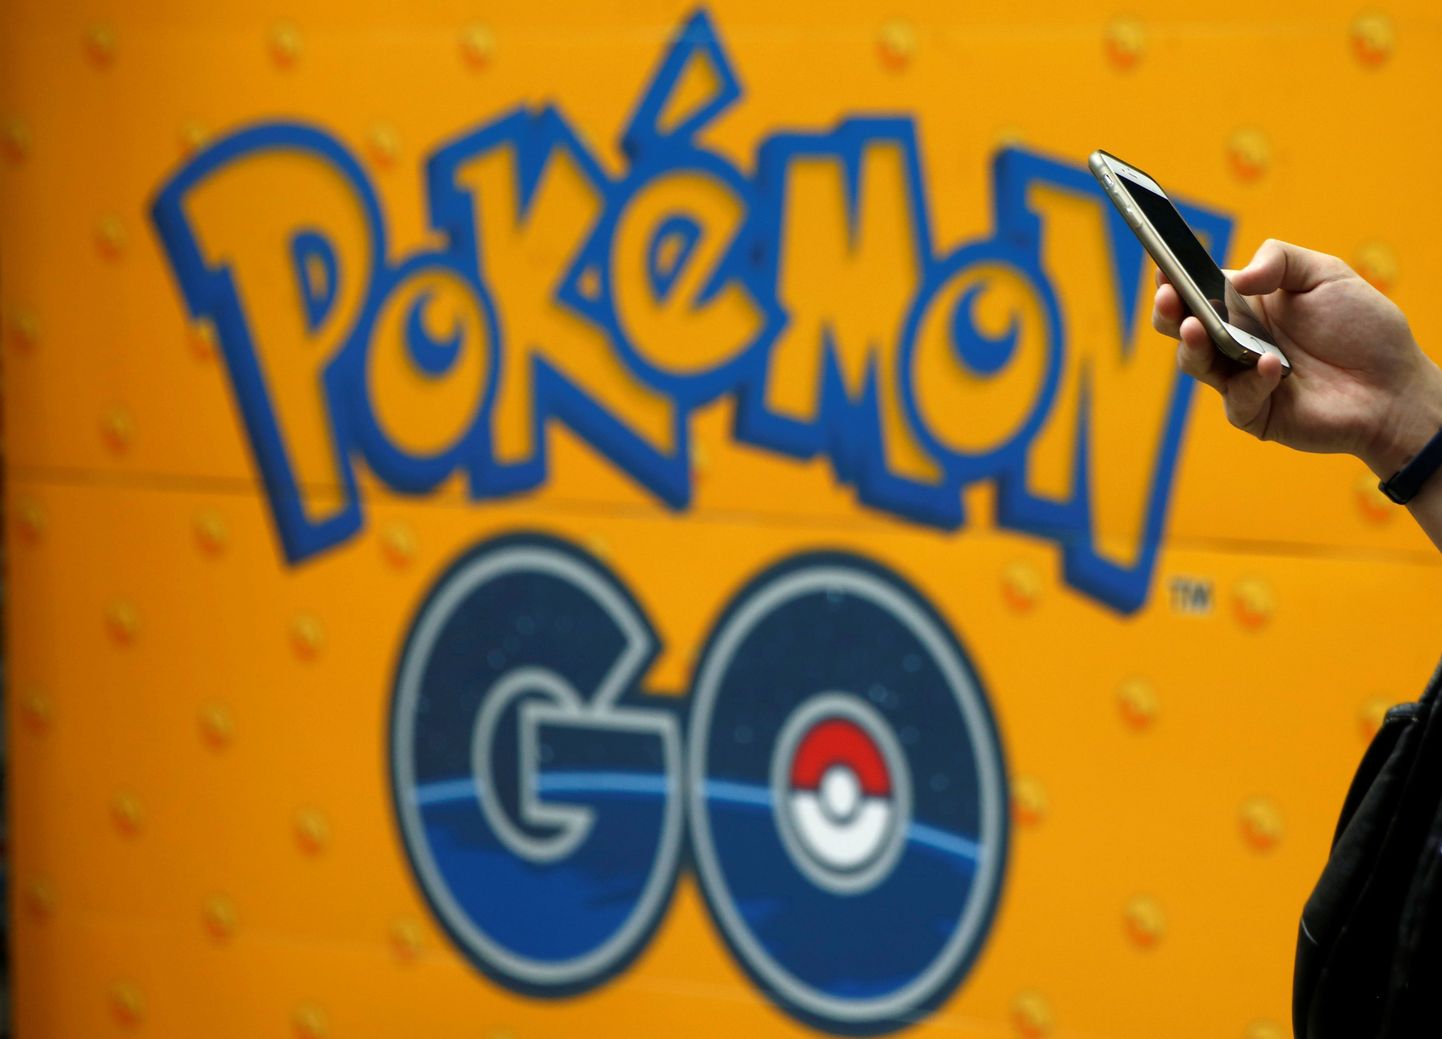 Логотип игры Pokemon Go. Иллюстративное фото.